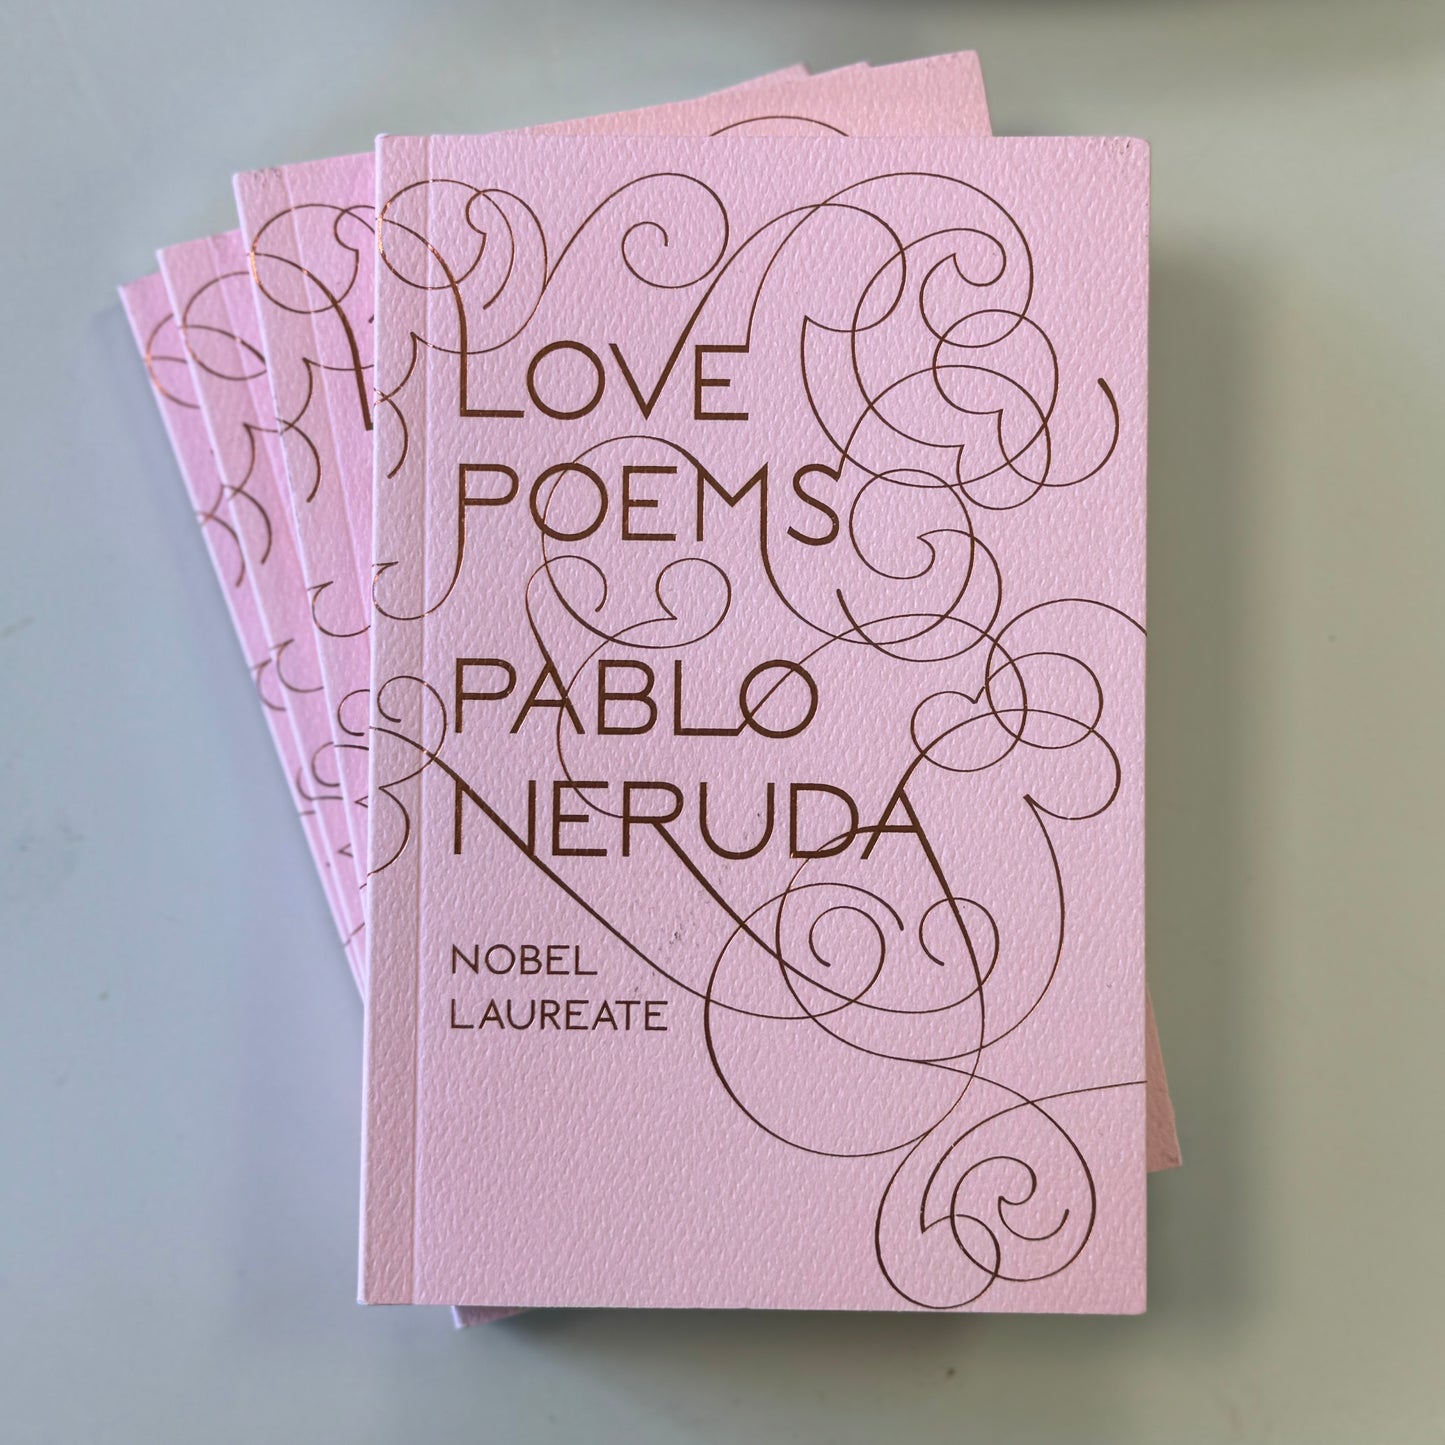 Love Poems (Bilingual Edition) by Pablo Neruda